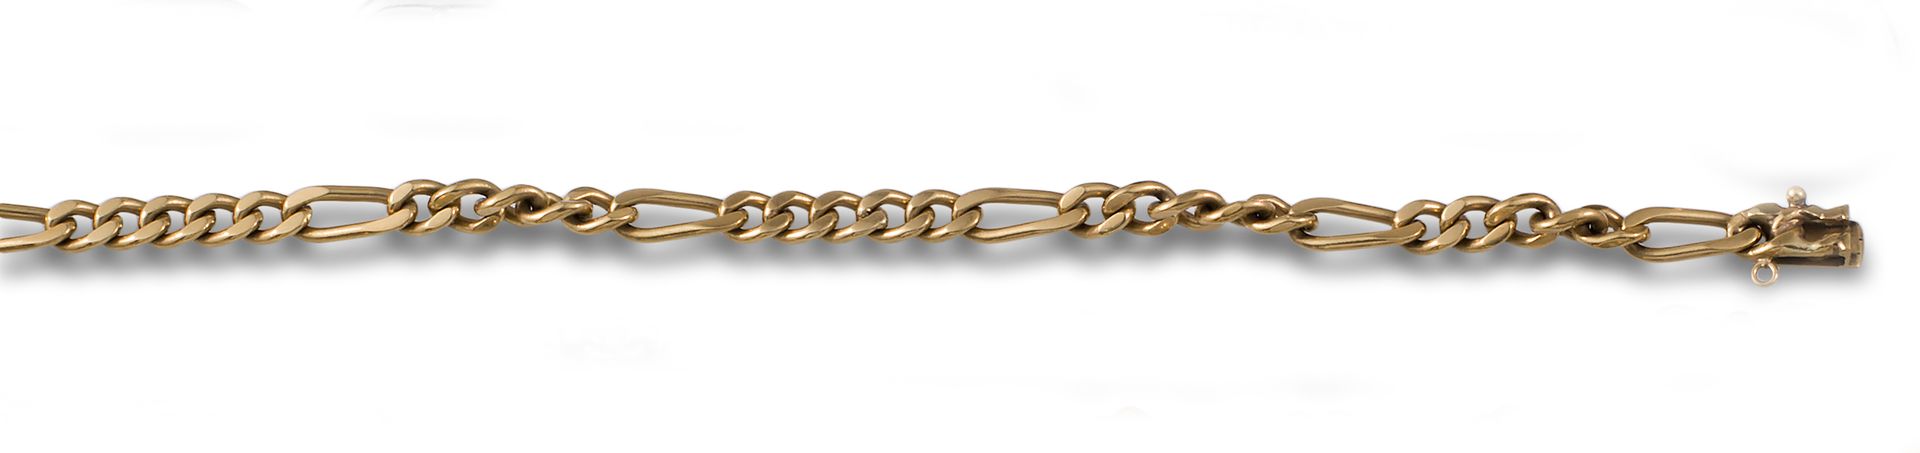 GOLD BRAIDED BRACELET 18kt yellow gold bearded bracelet. Weight: 15.96 gr. .